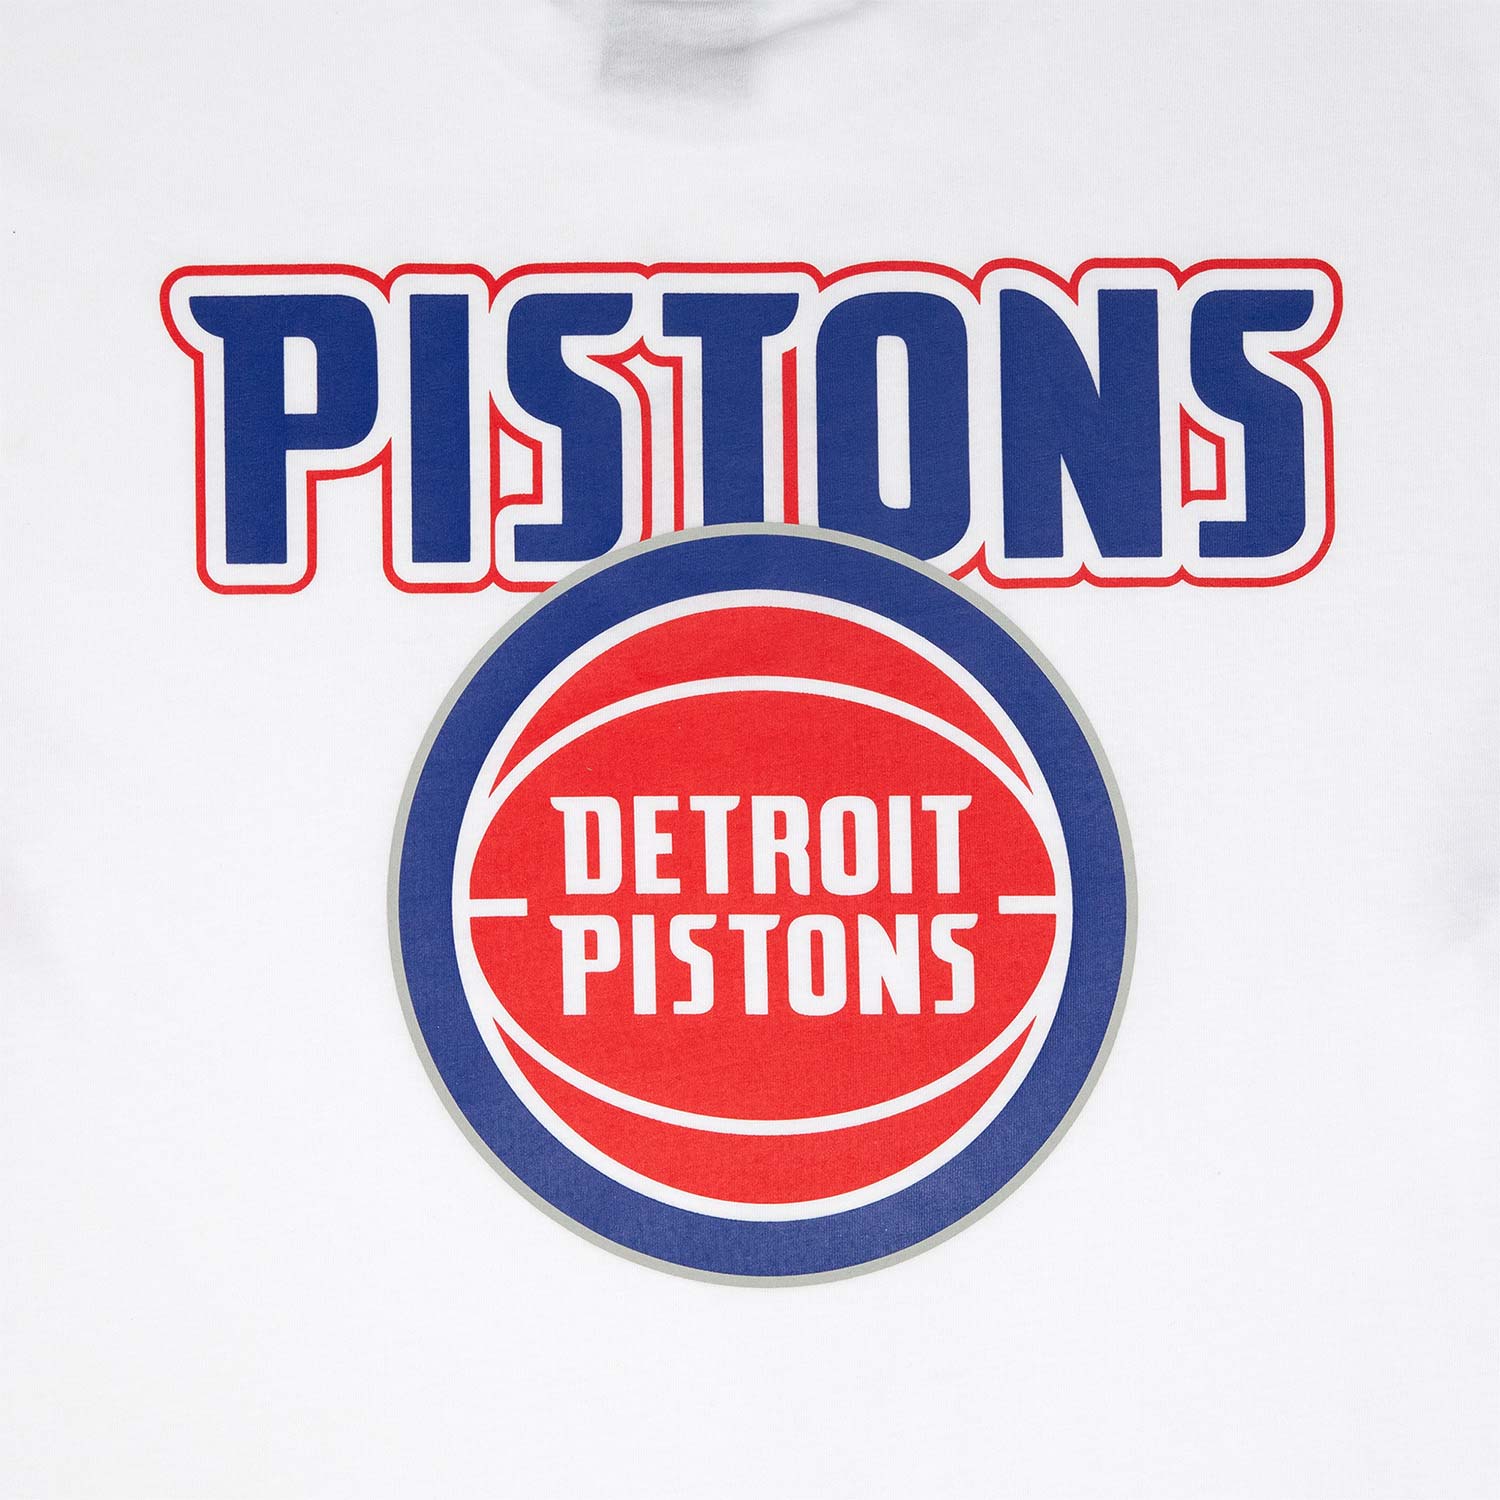 Detroit Pistons NBA Paris Games White T-Shirt